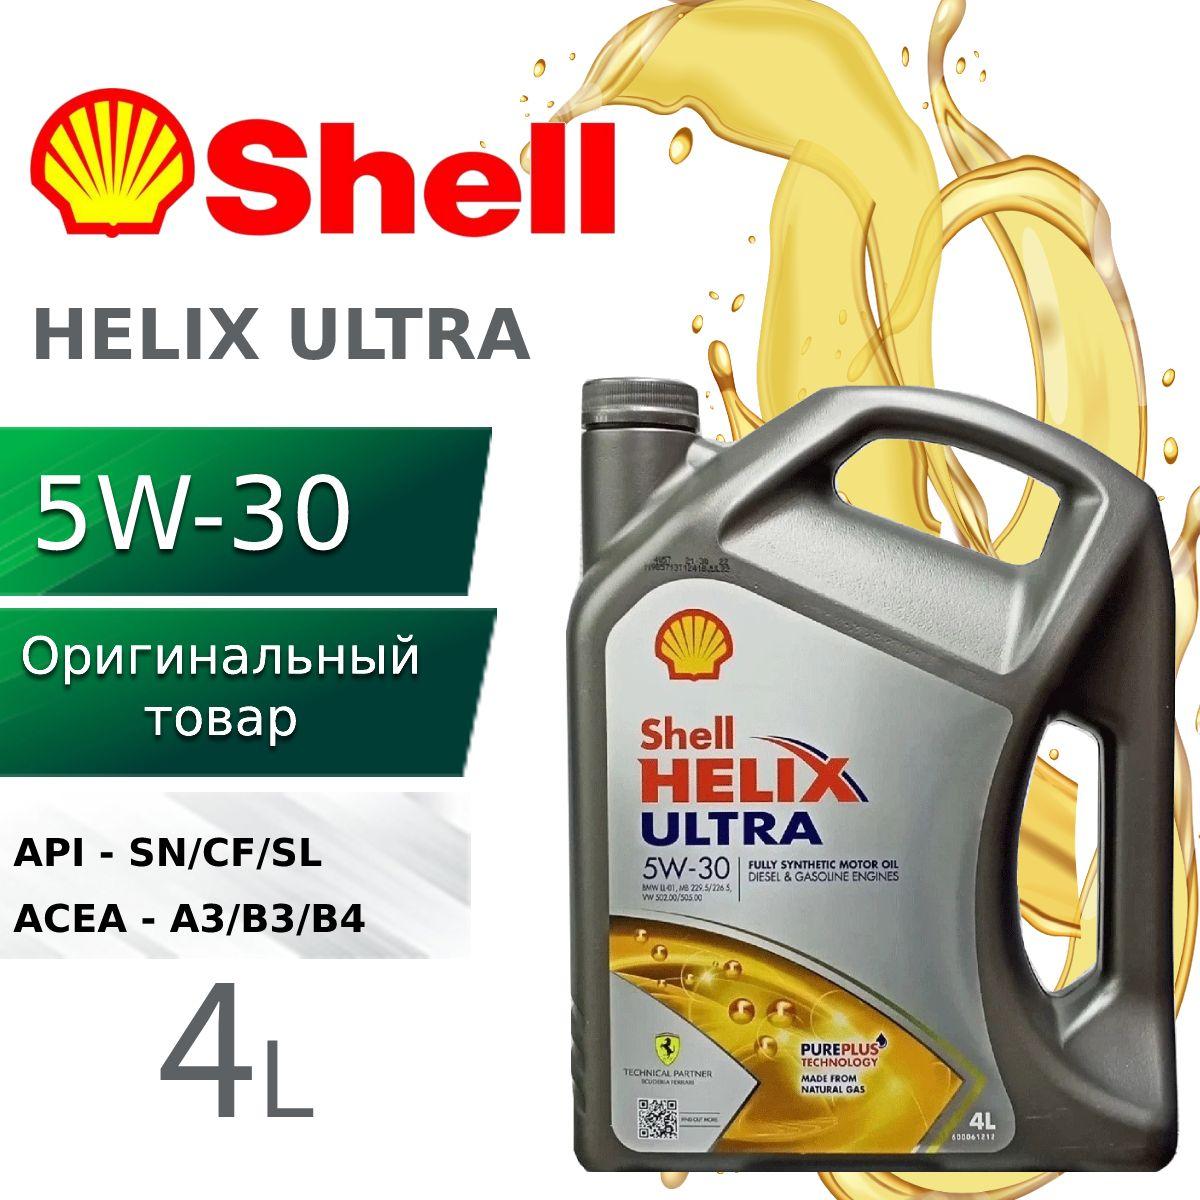 Shell | Shell HELIX ULTRA 5W-30 Масло моторное, Синтетическое, 4 л